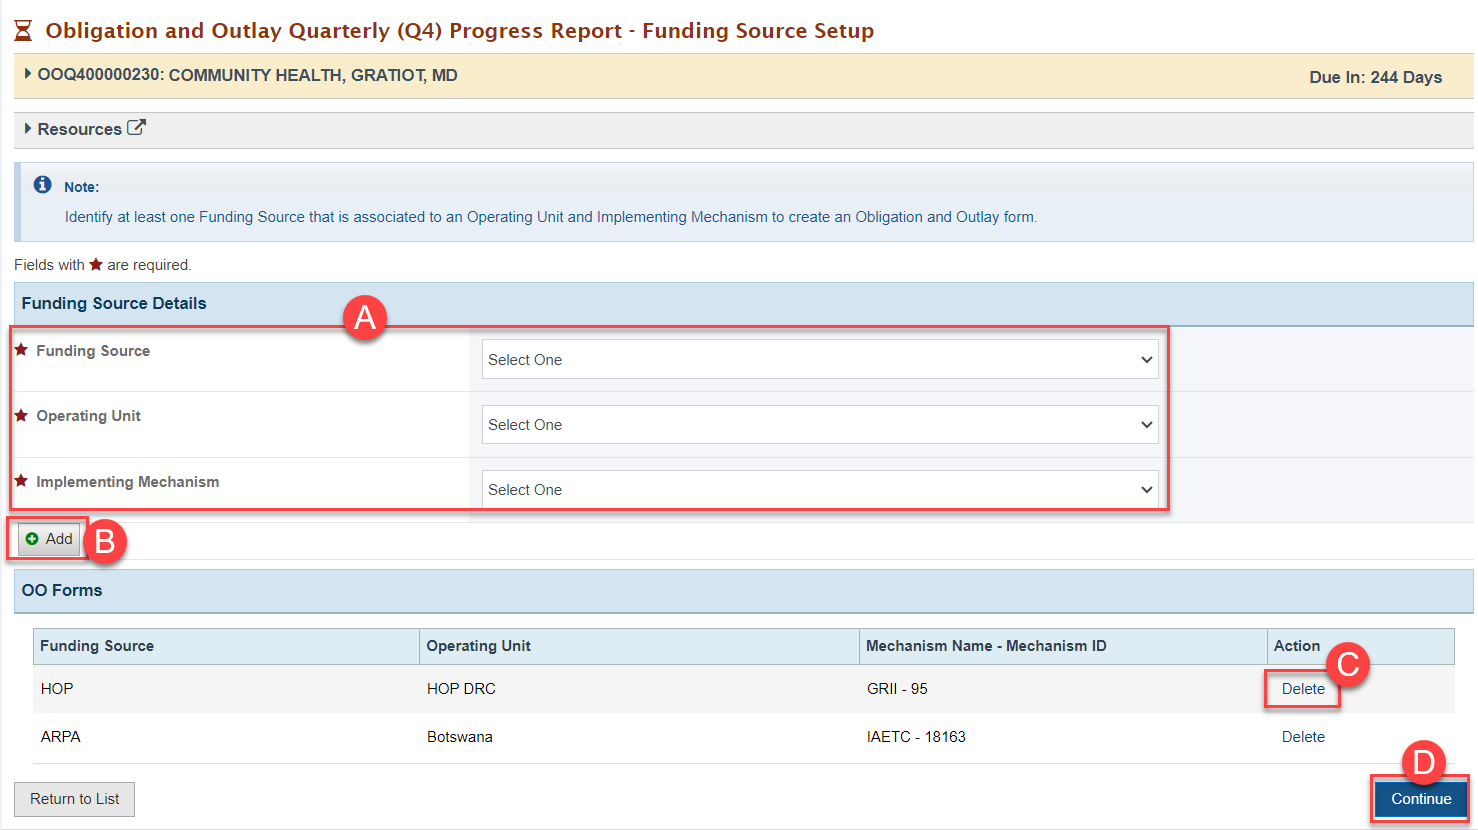 Screenshot of the Funding Source Setup page